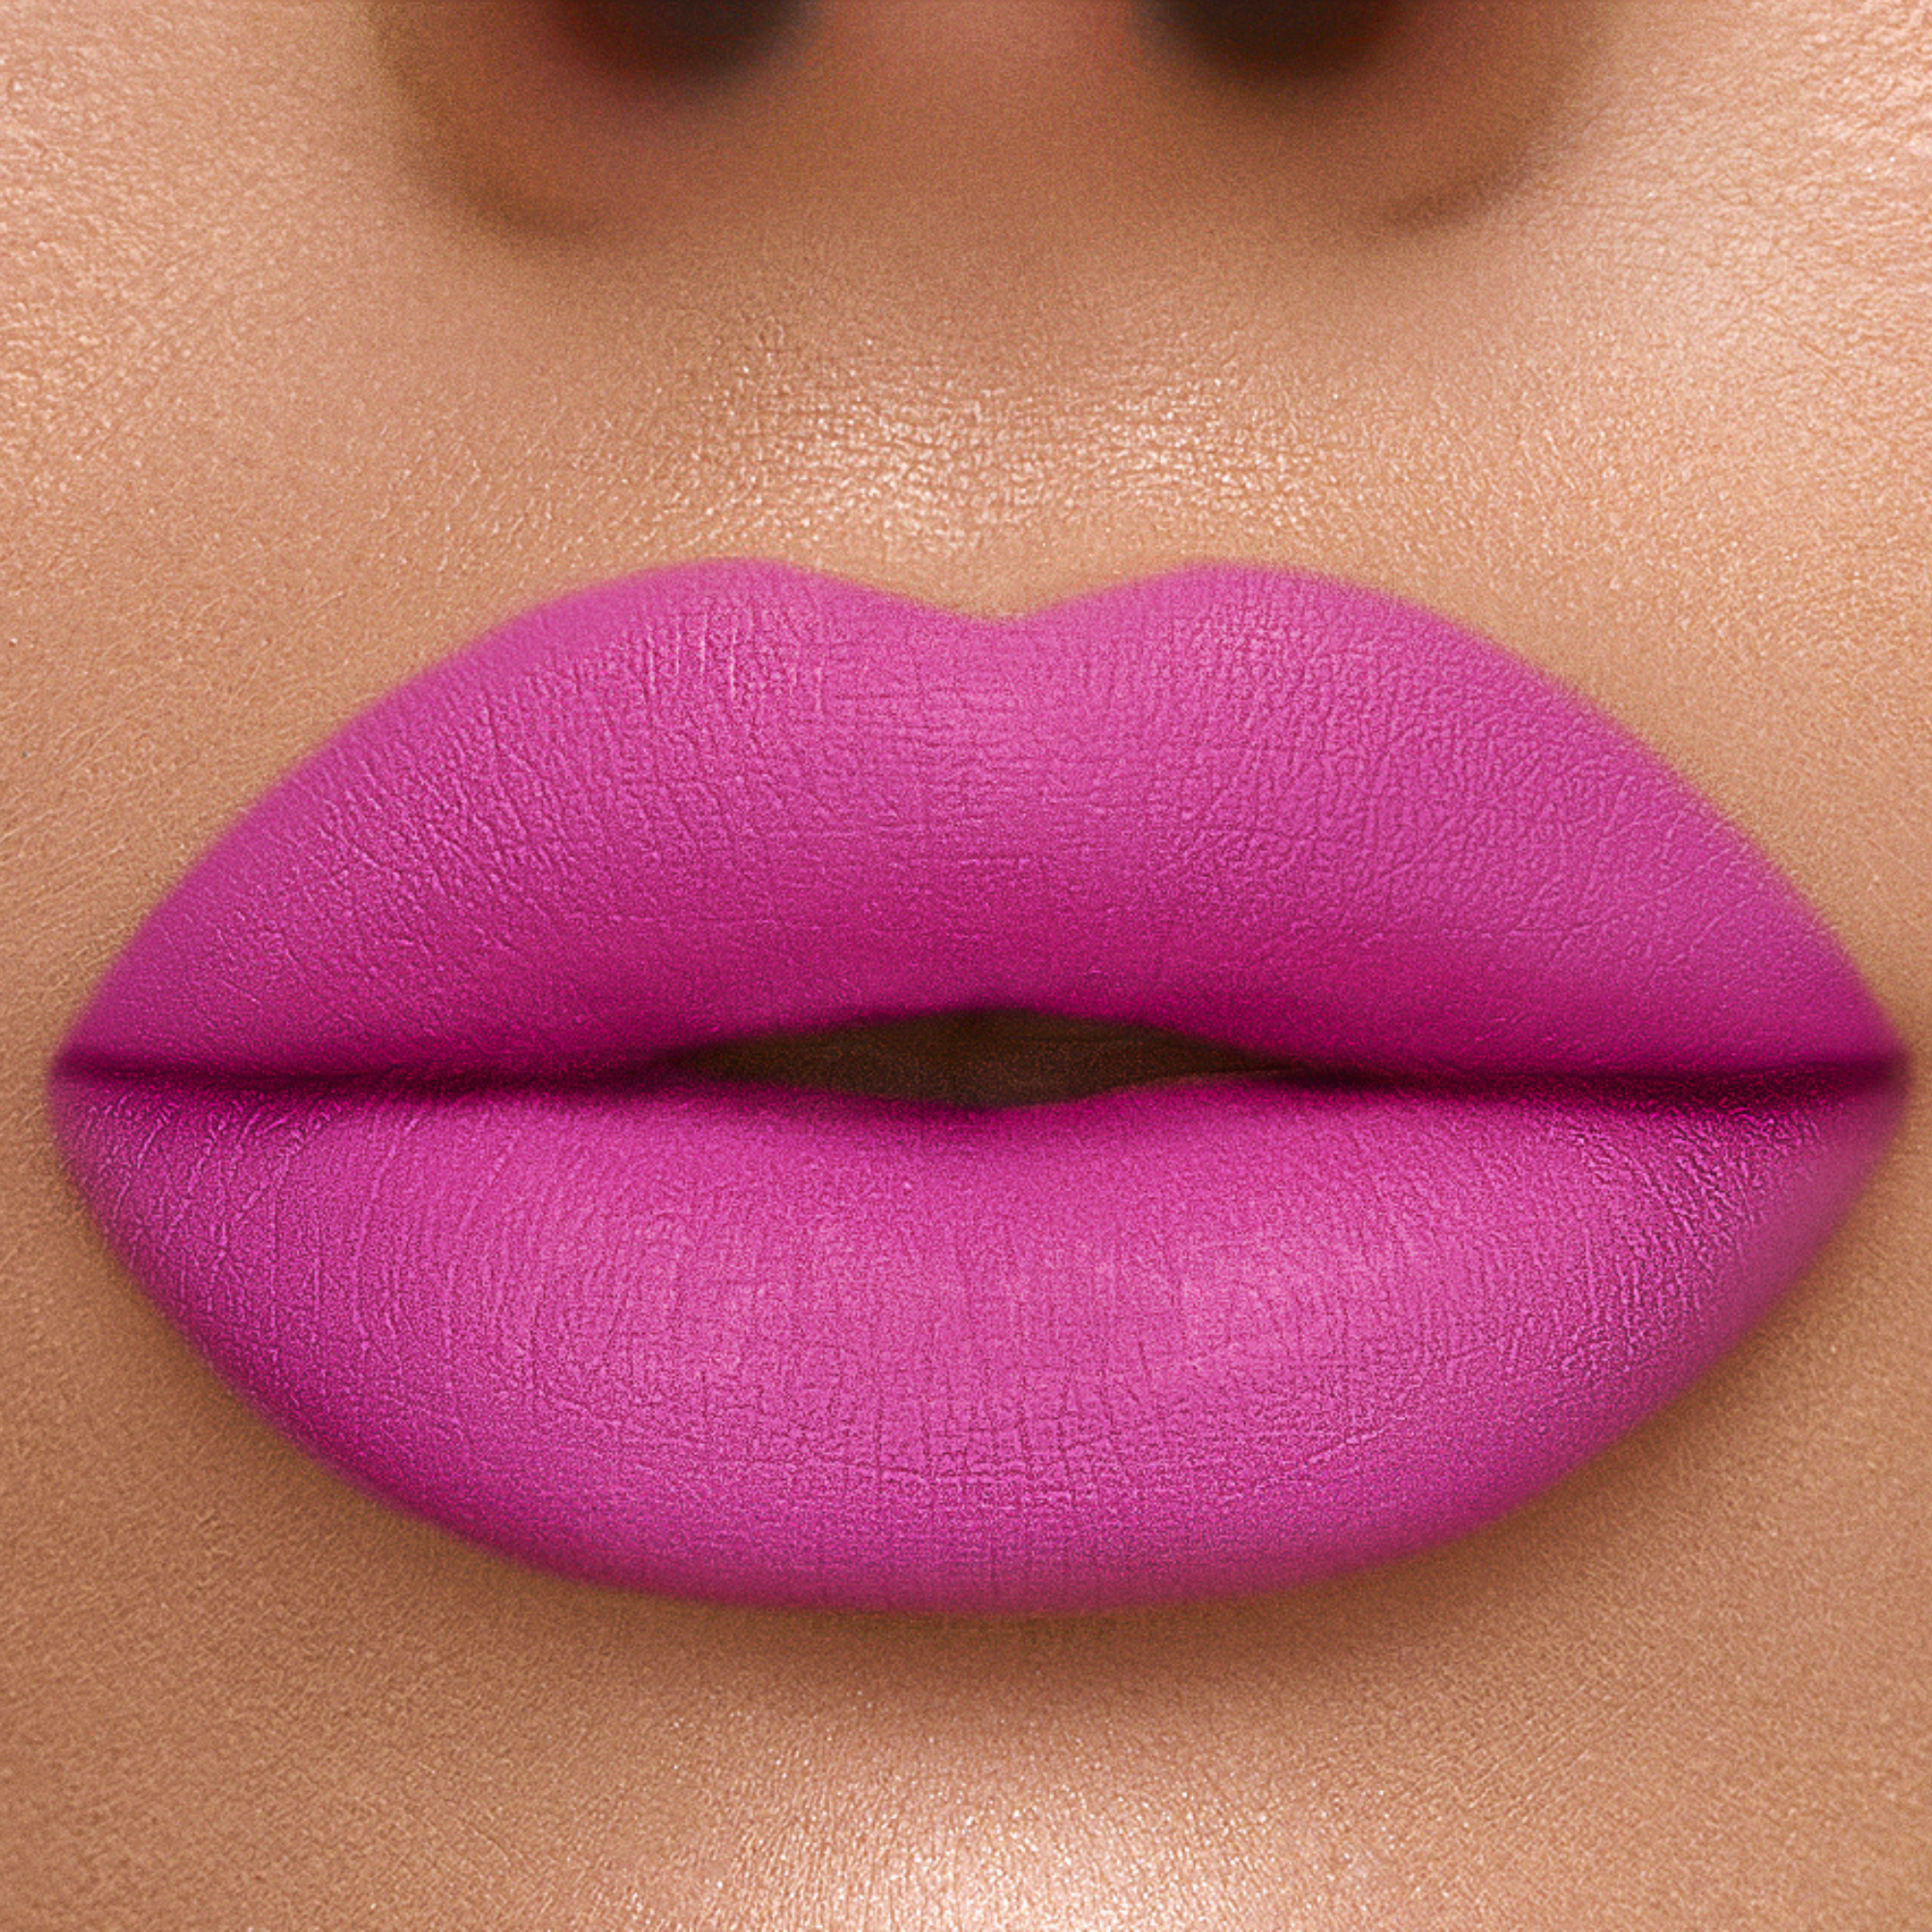 BPerfect Cosmetics - Supreme Velvet Bright Liquid Lips Kiss Goodbye